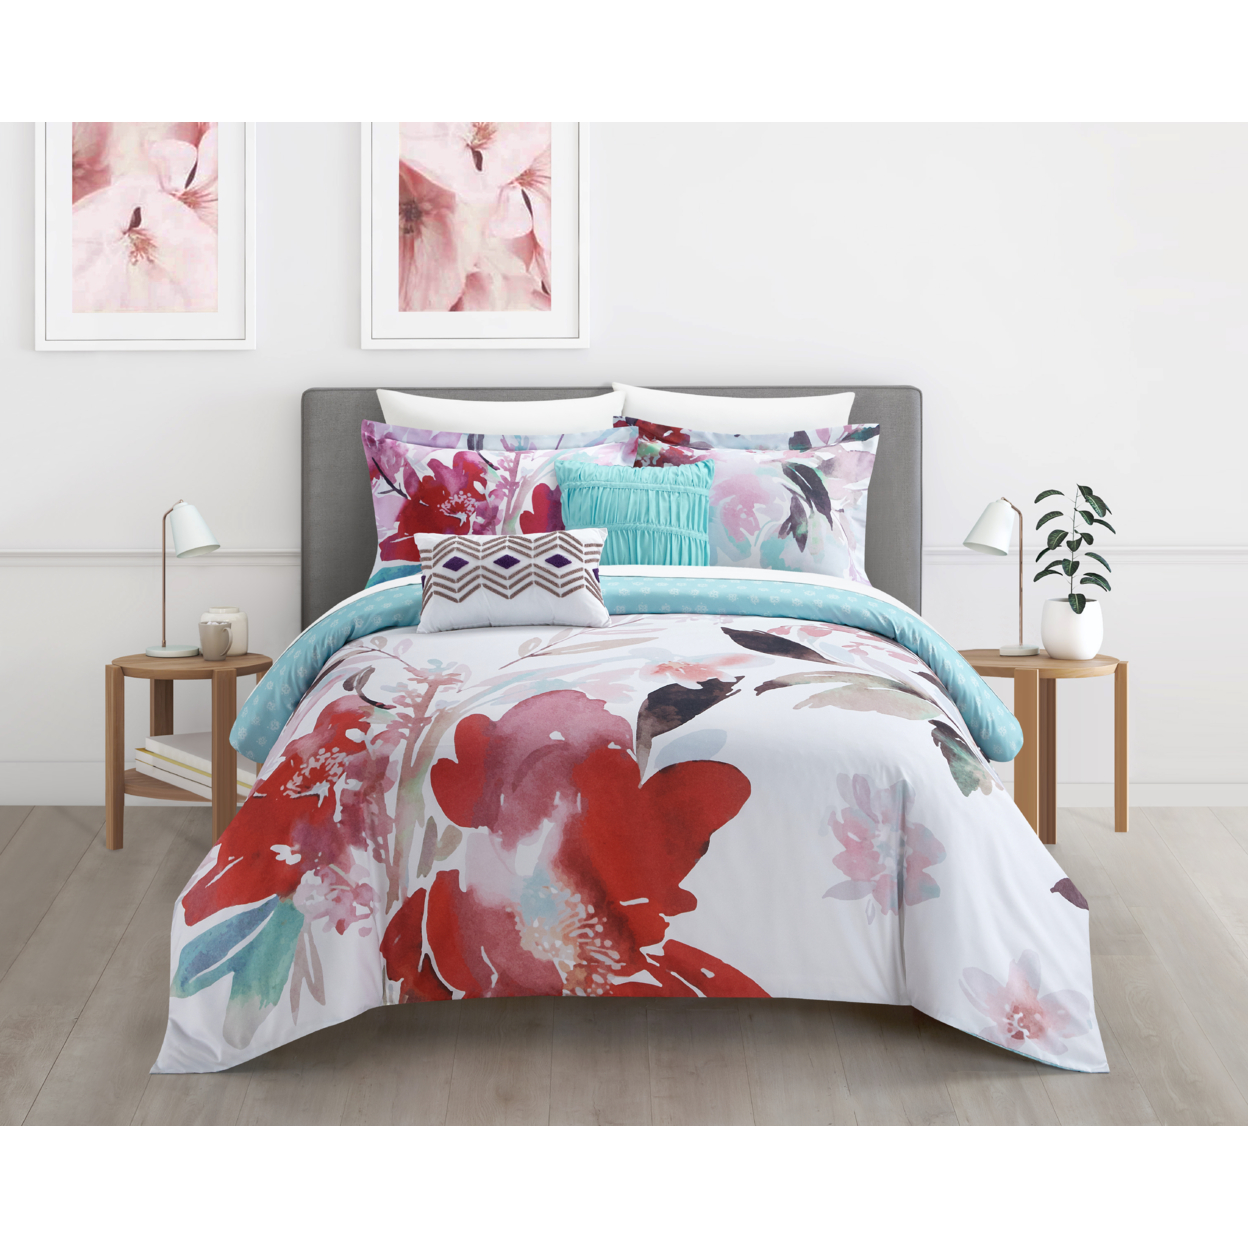 Victoria 5 Piece Reversible Comforter Set Floral Watercolor Design Bedding - Waldo Red, King